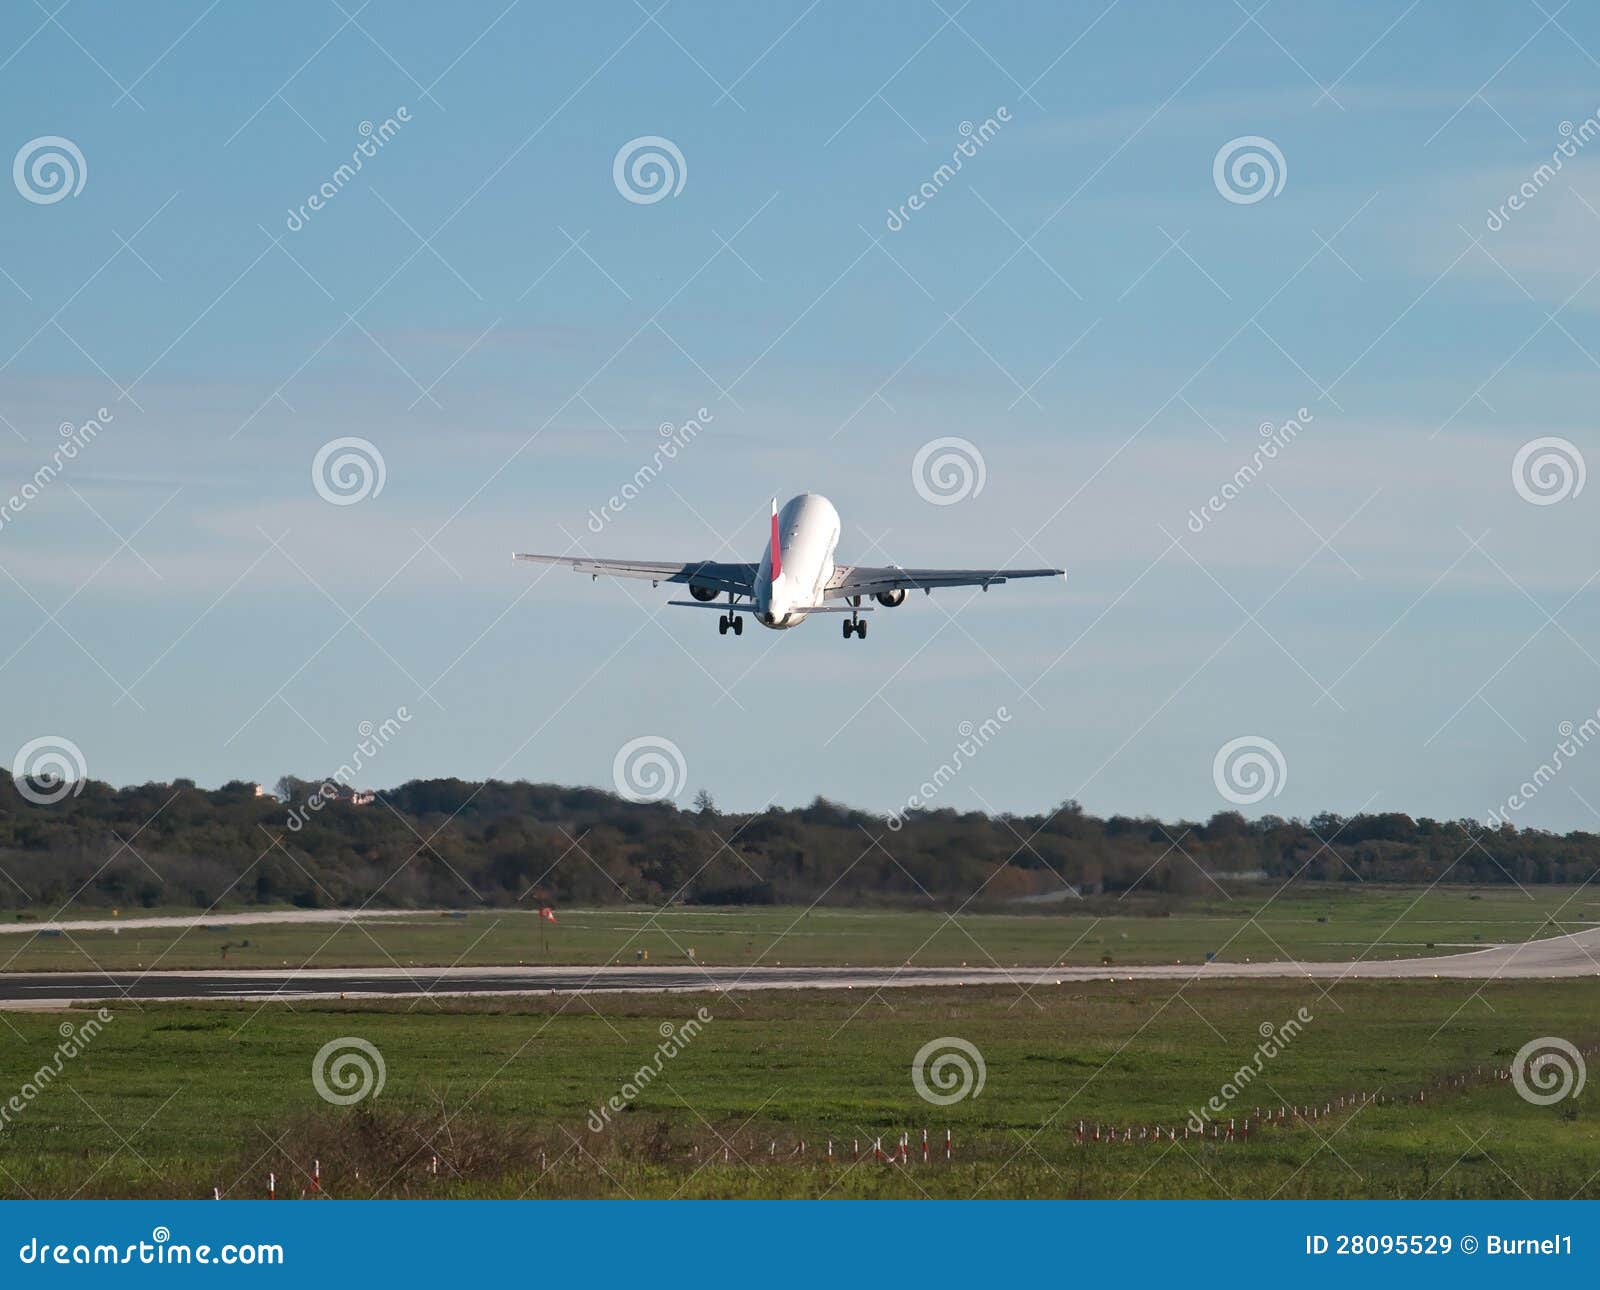 airplane takeoff